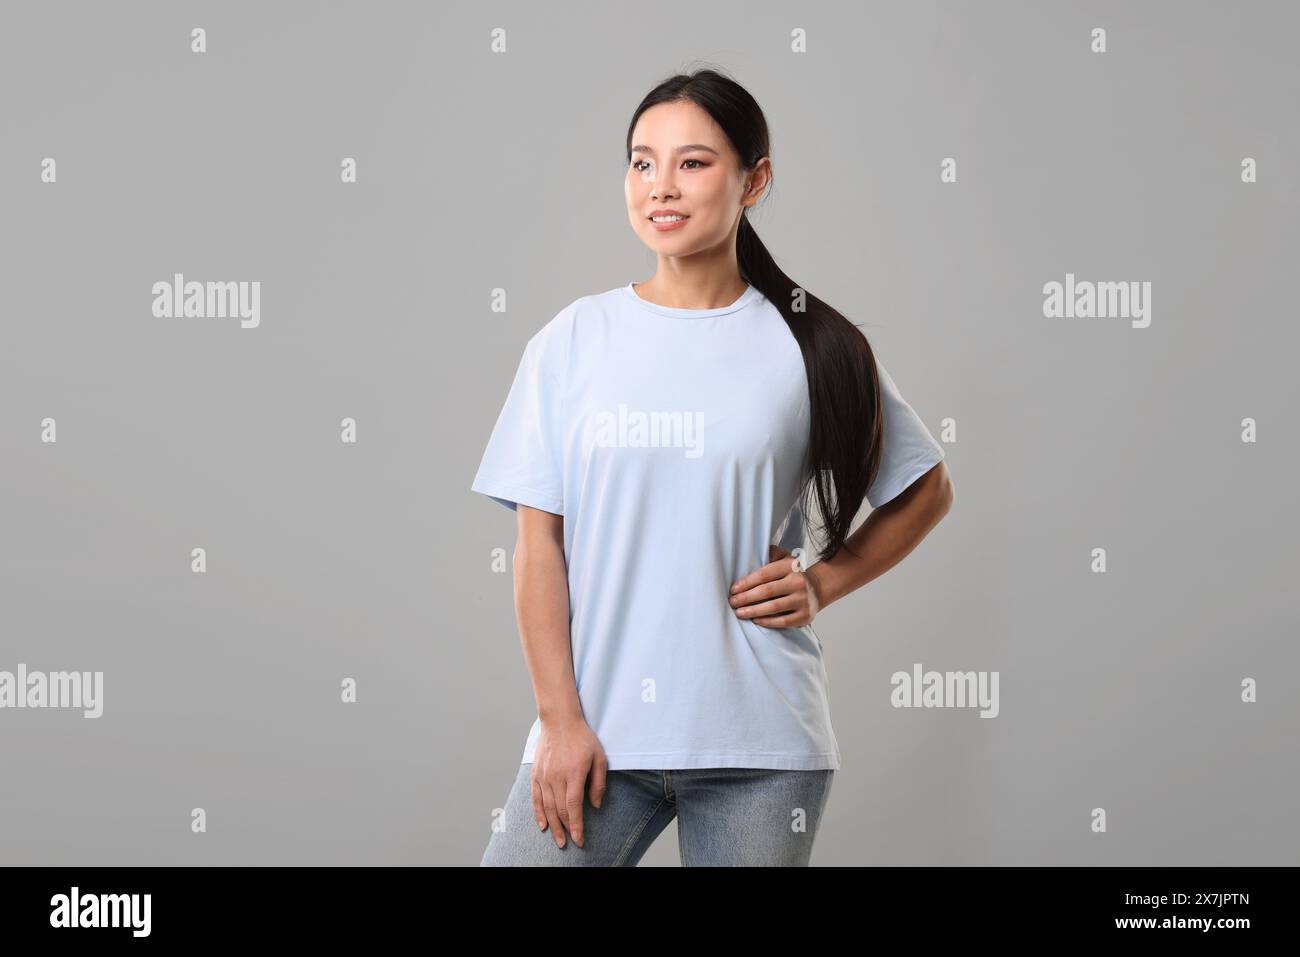 Woman wearing light blue t-shirt on grey background Stock Photo